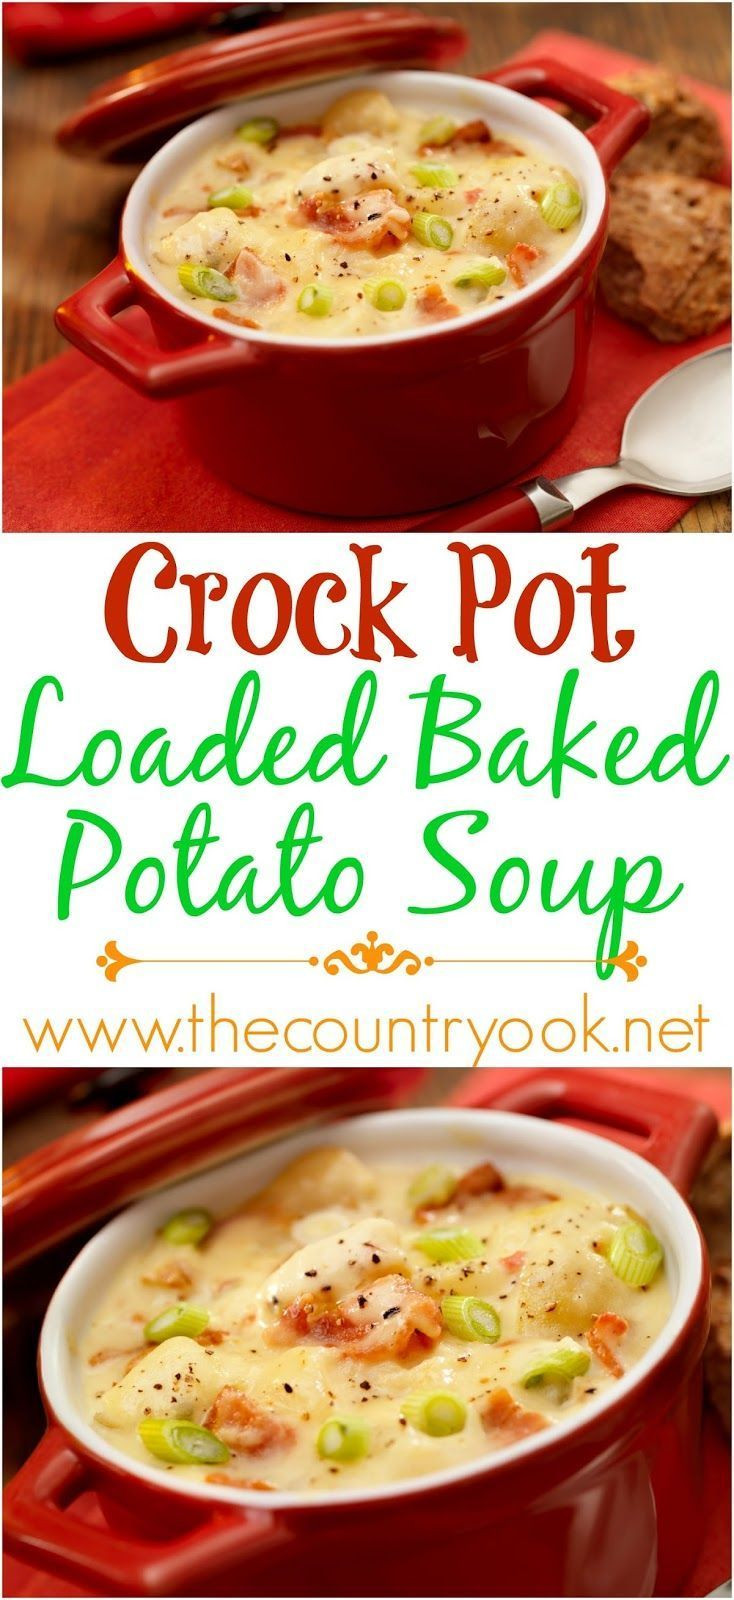 Potato Soup In Crock Pot
 Crock Pot Loaded Baked Potato Soup recipe from The Country